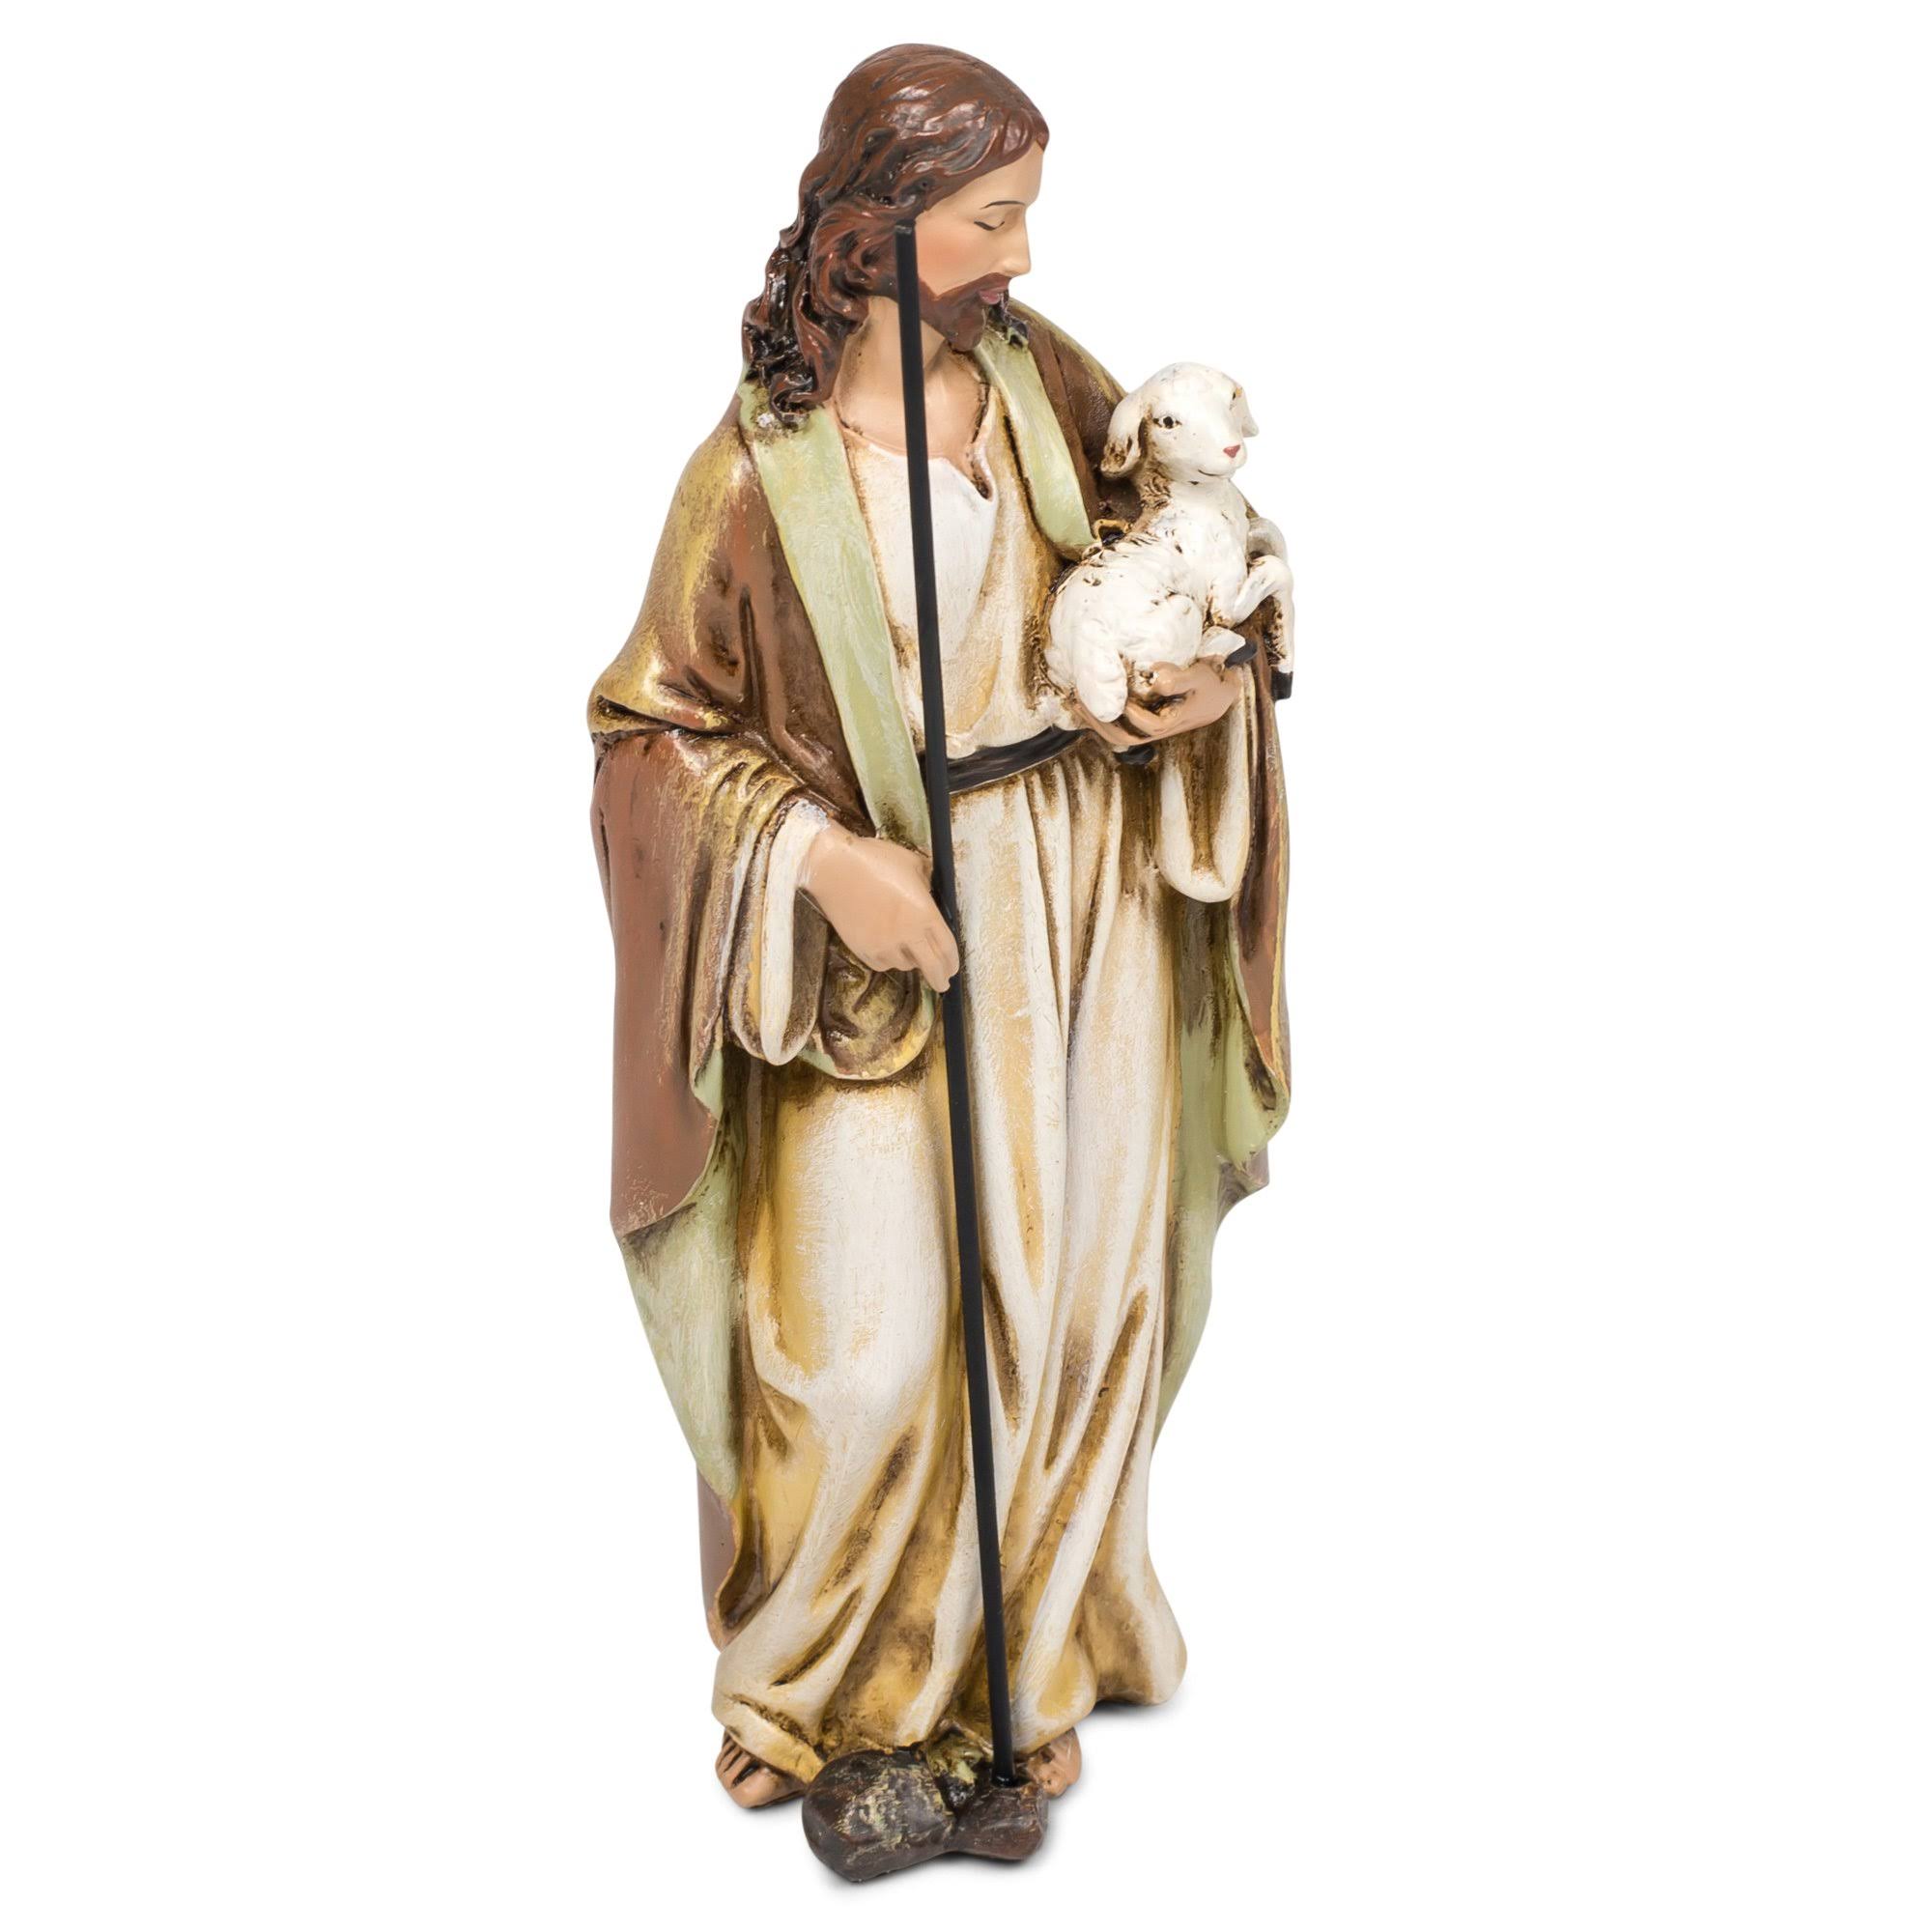 Good Shepherd Lamb Holy Statue Jesus Christ Protection Religious Gift - 6"